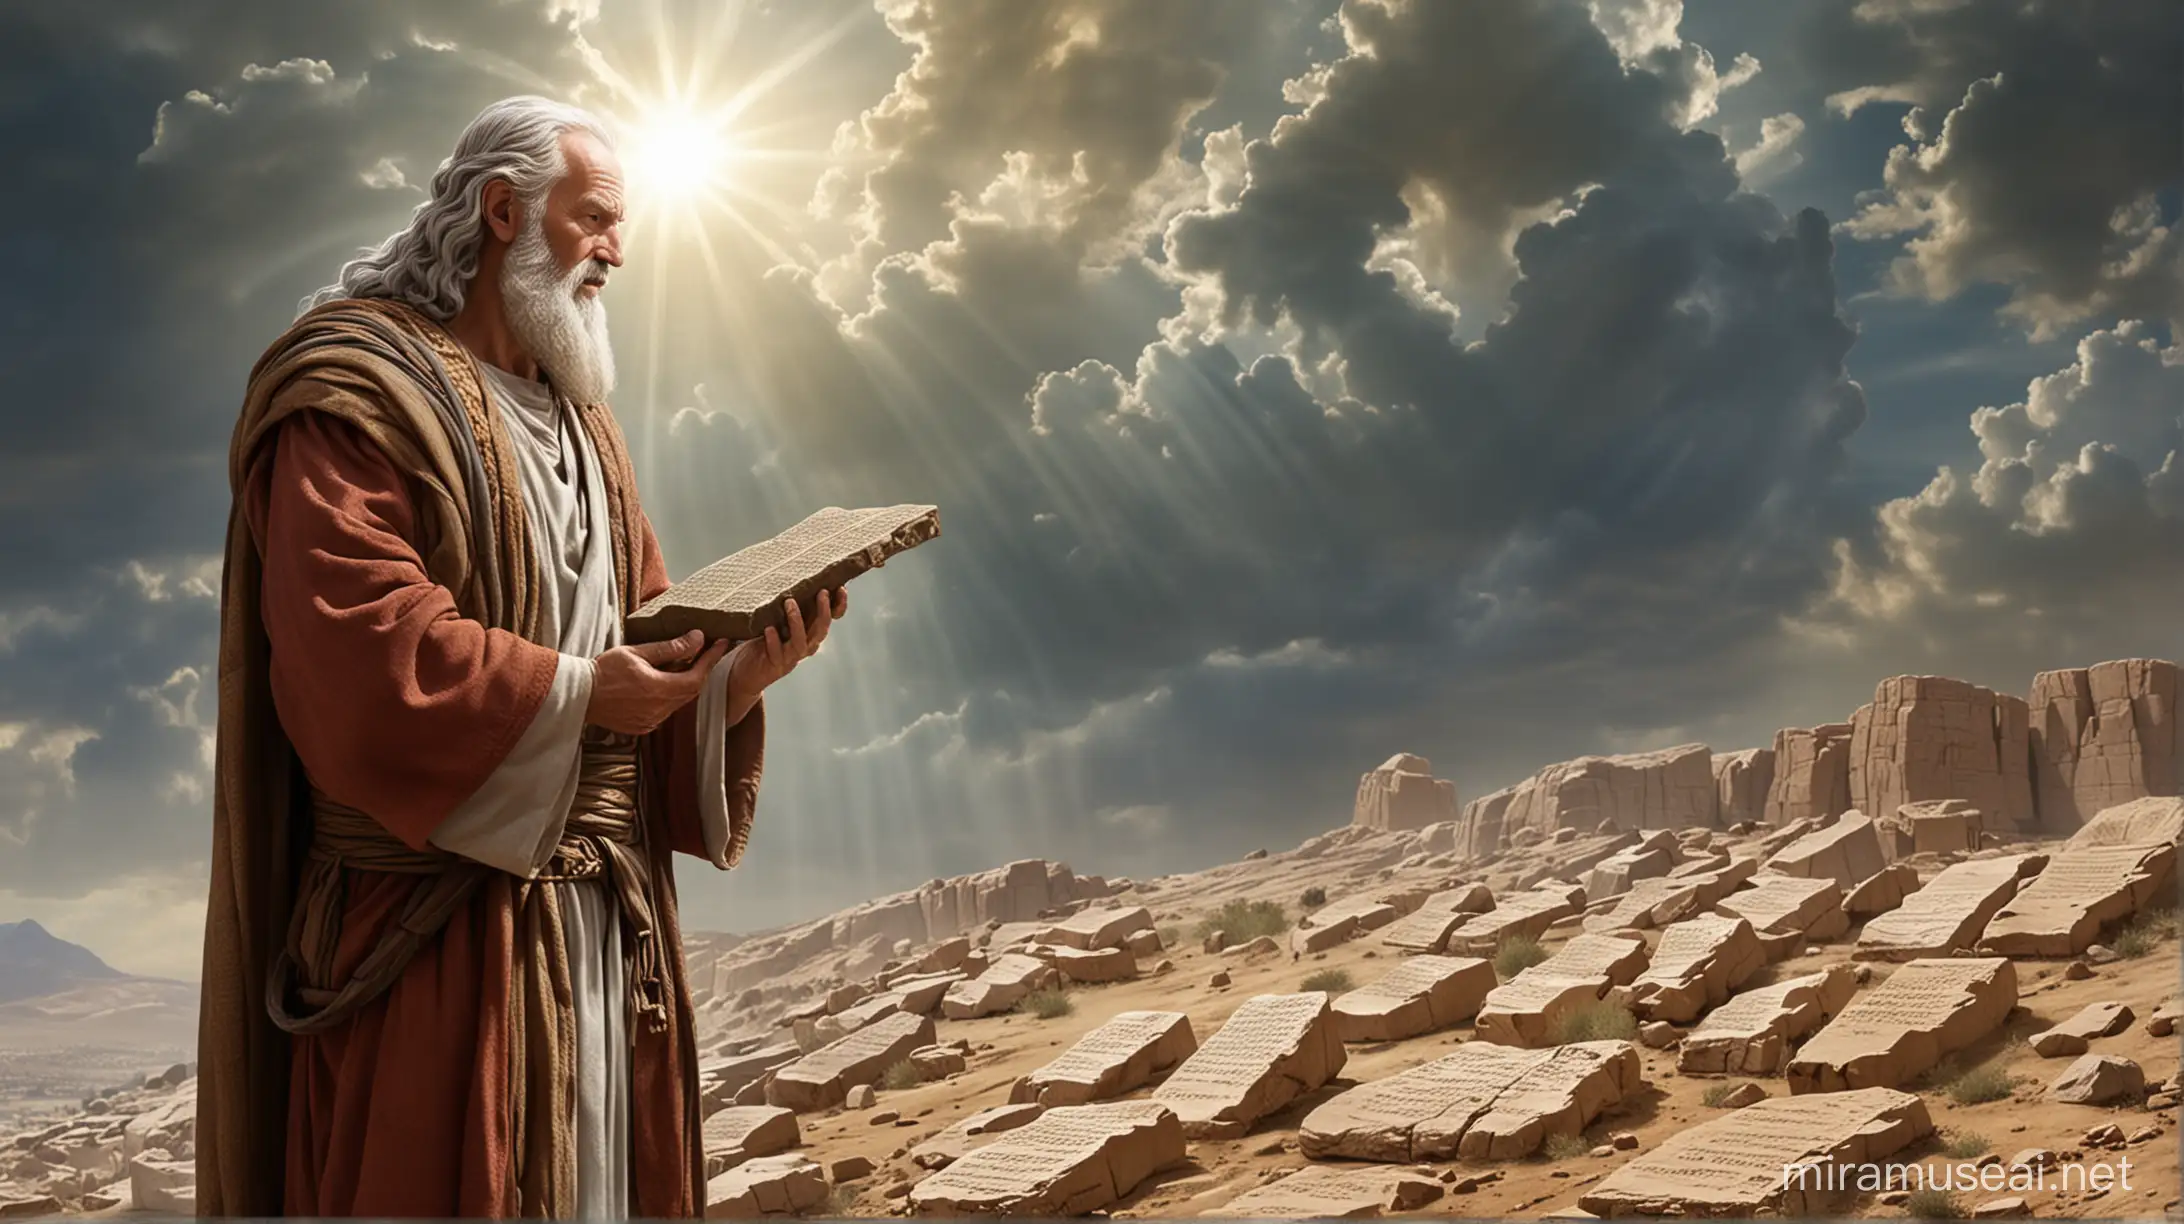 Moses Receives the Ten Commandments on Mount Sinai